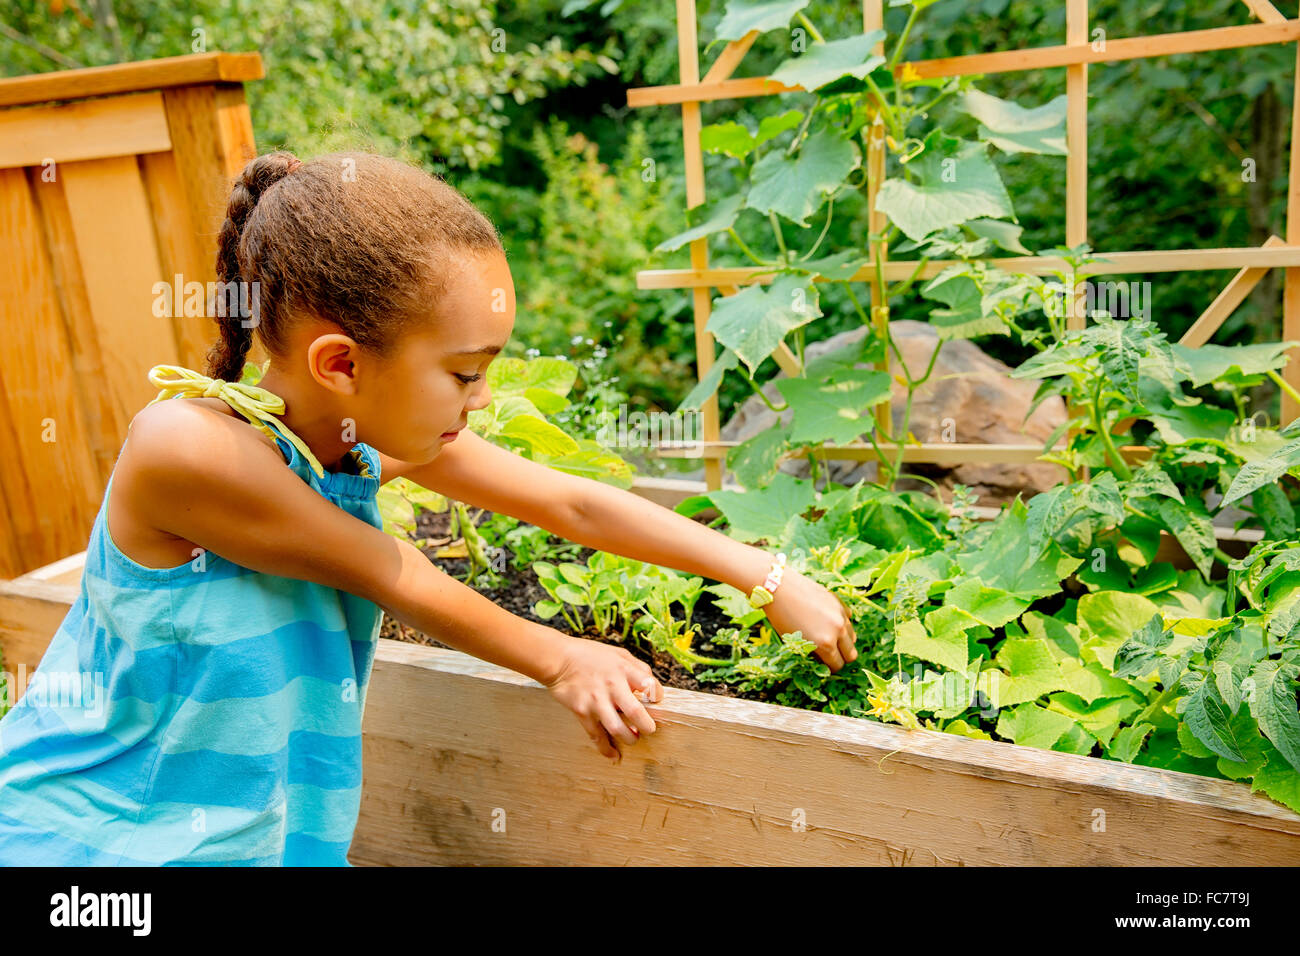 Mixed Race girl examining plants in garden Banque D'Images